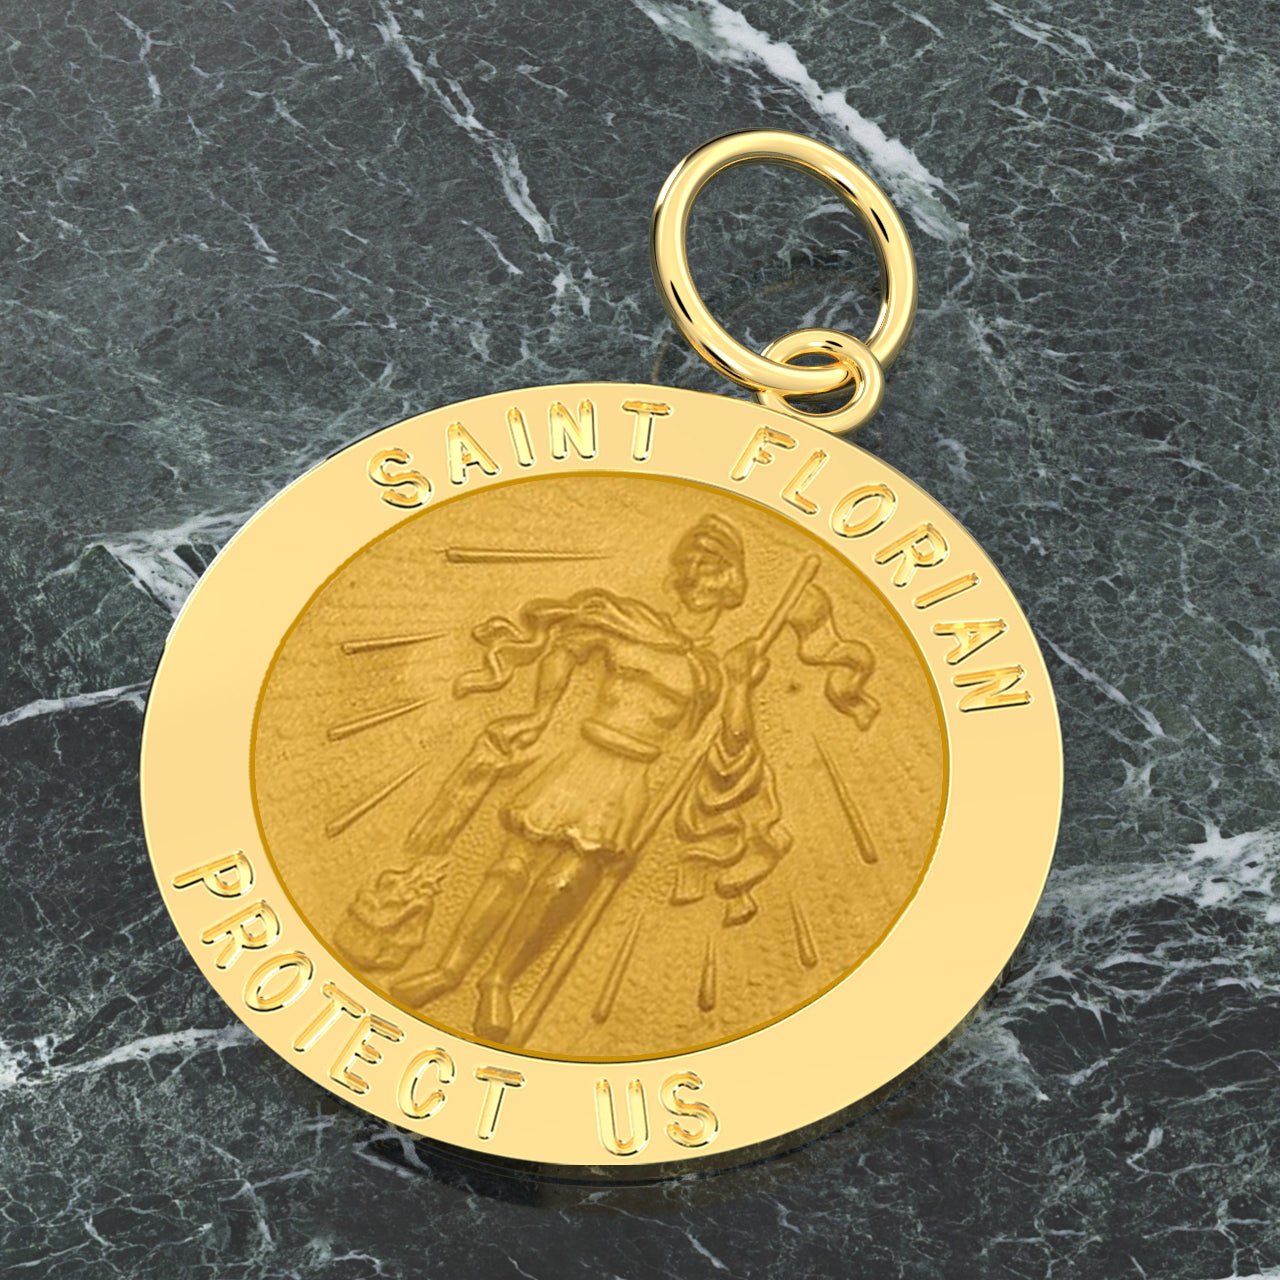 Men's 14K Gold Solid Saint Florian Fireman Medal Pendant Necklace, 25mm - US Jewels